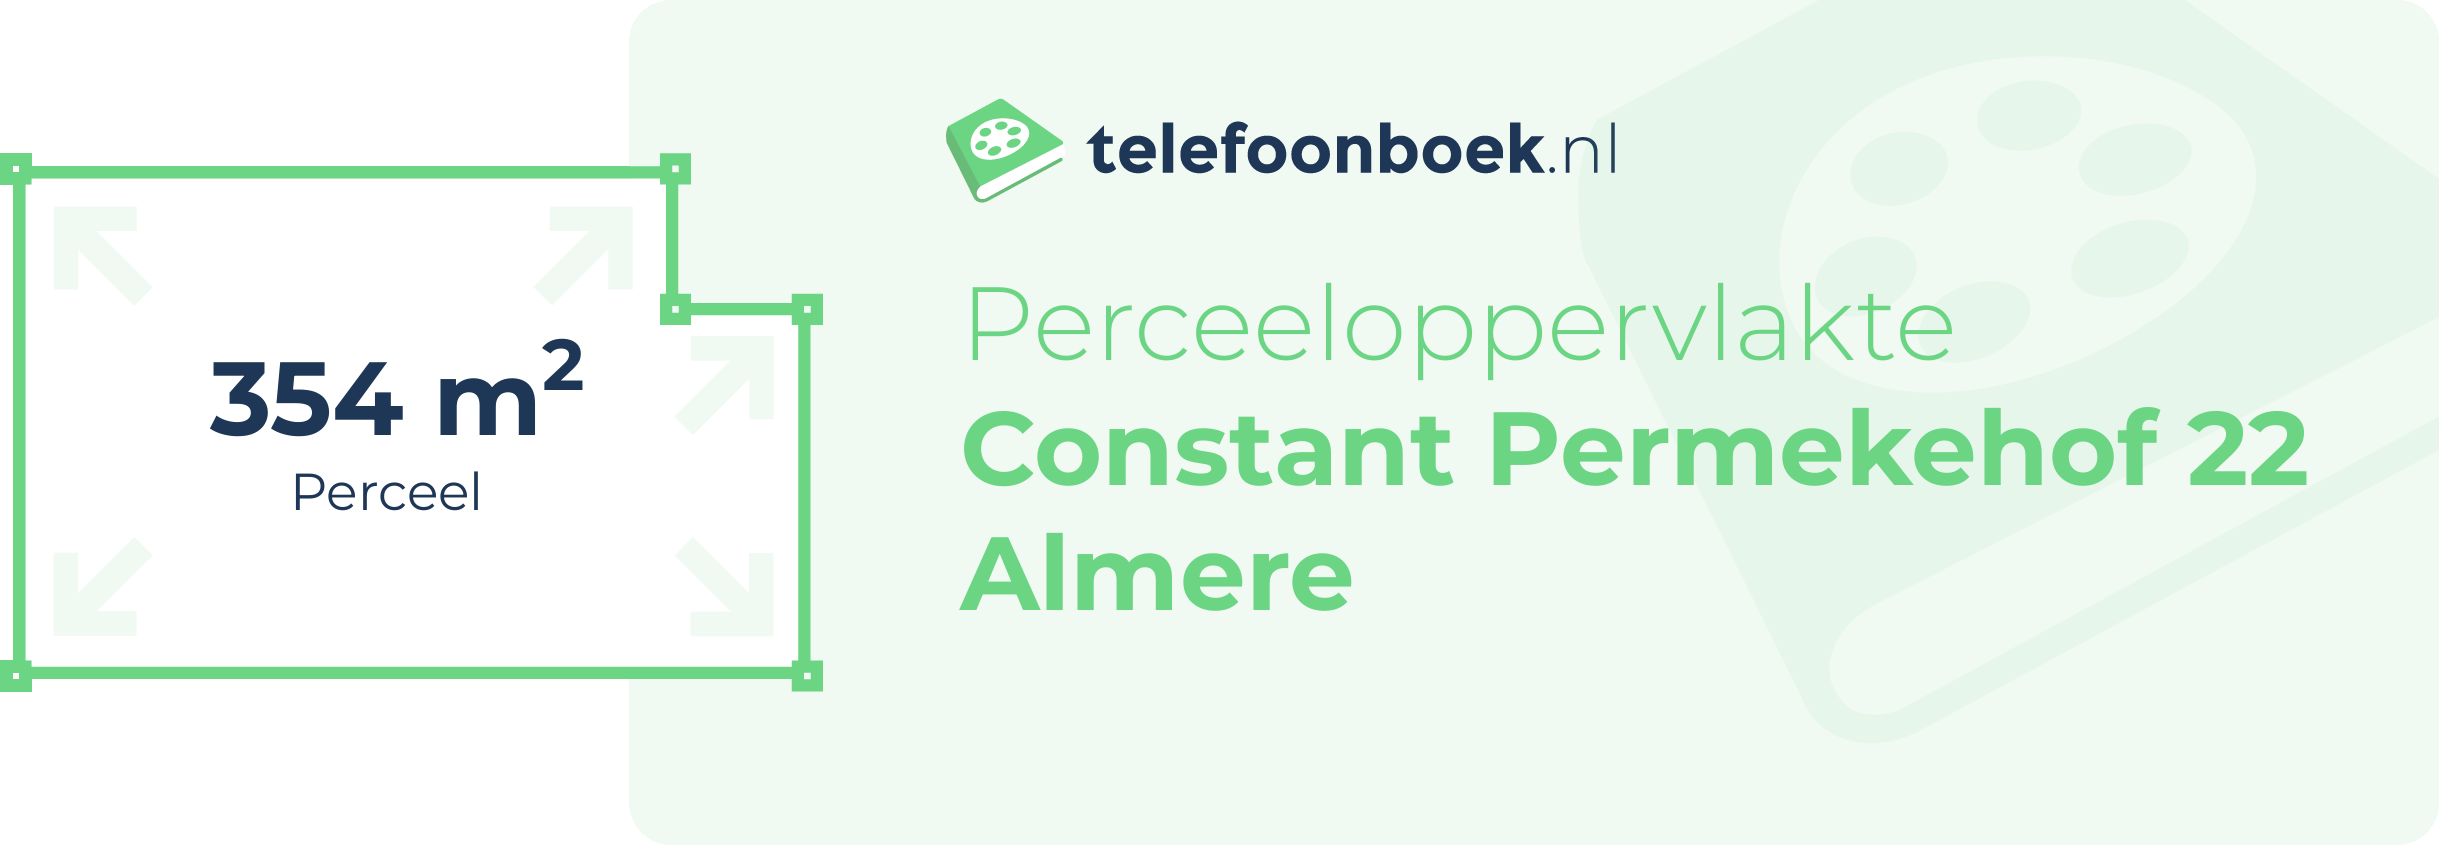 Perceeloppervlakte Constant Permekehof 22 Almere